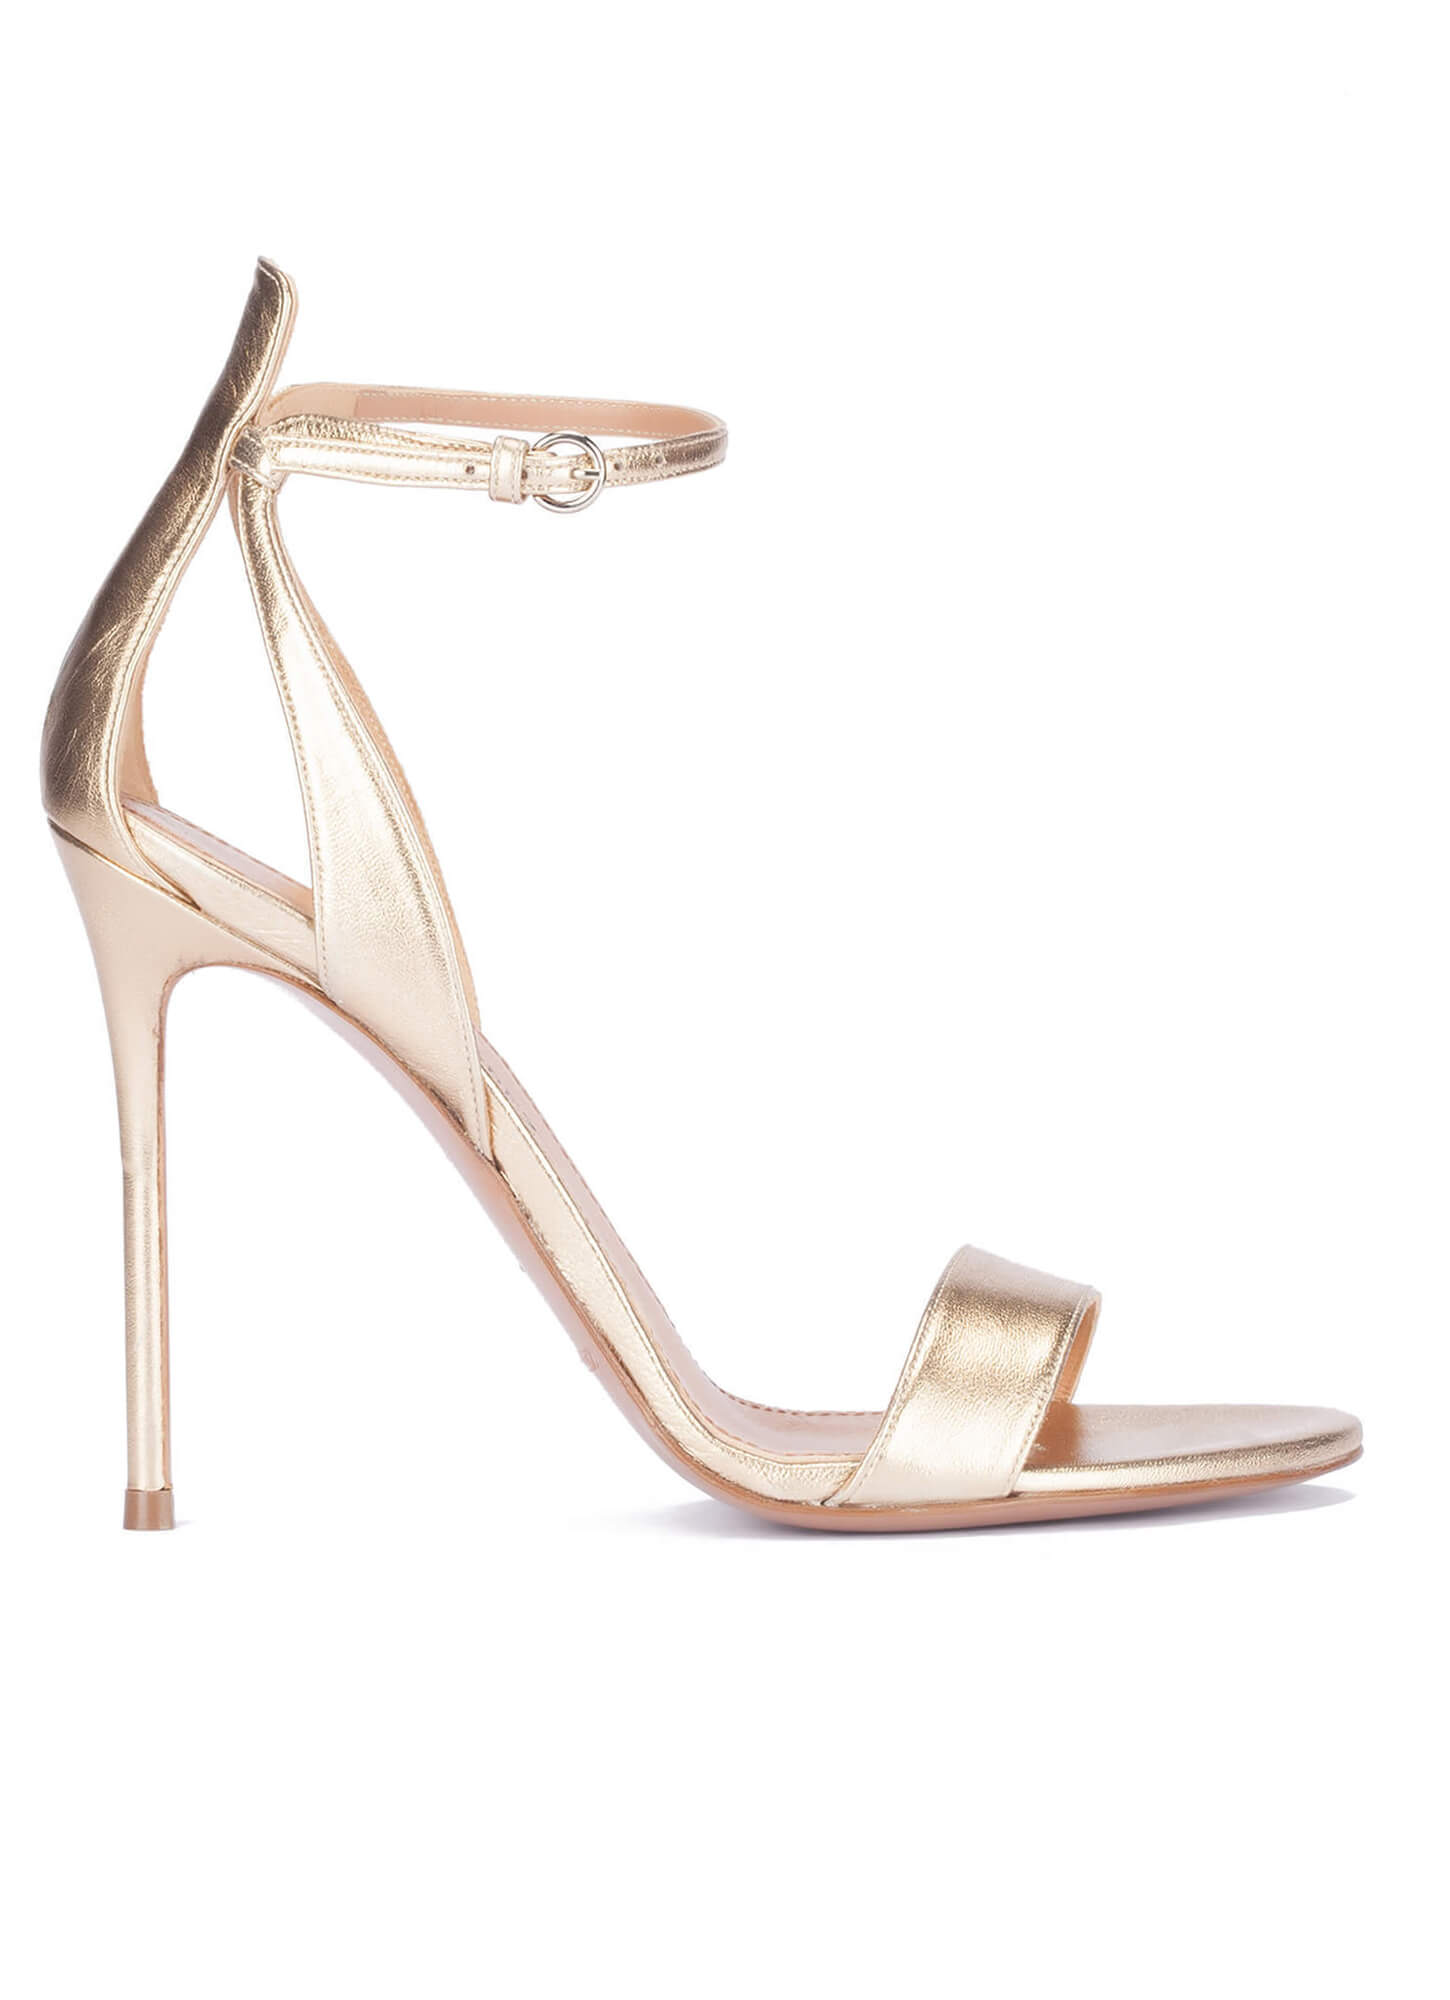 High heel sandals in gold leather - online shoe store Pura Lopez . PURA ...